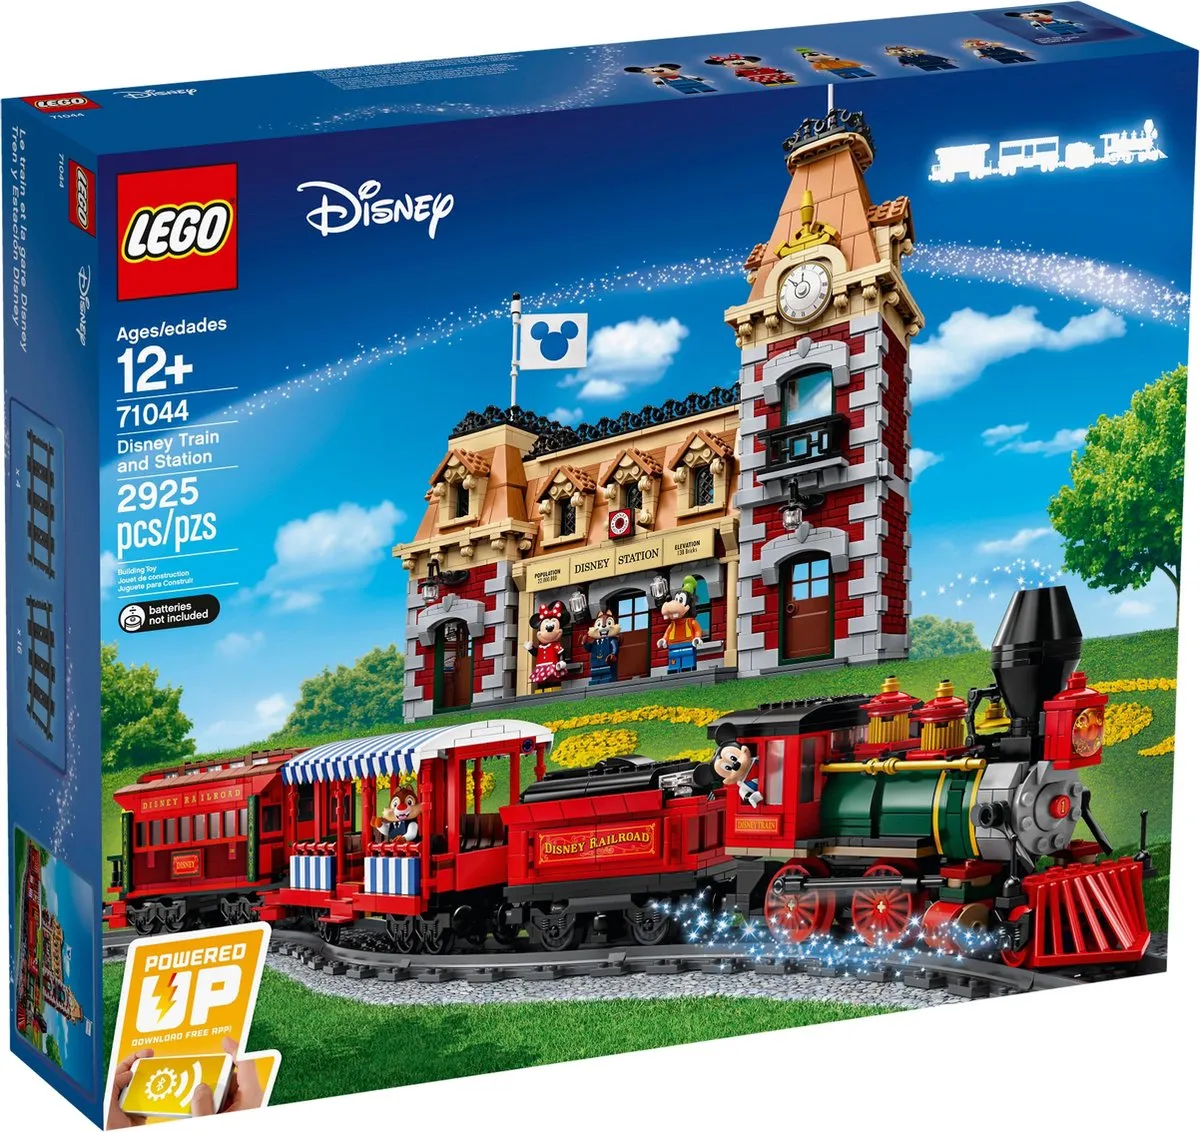 LEGO Disney Trein en Station - 71044 speelgoed